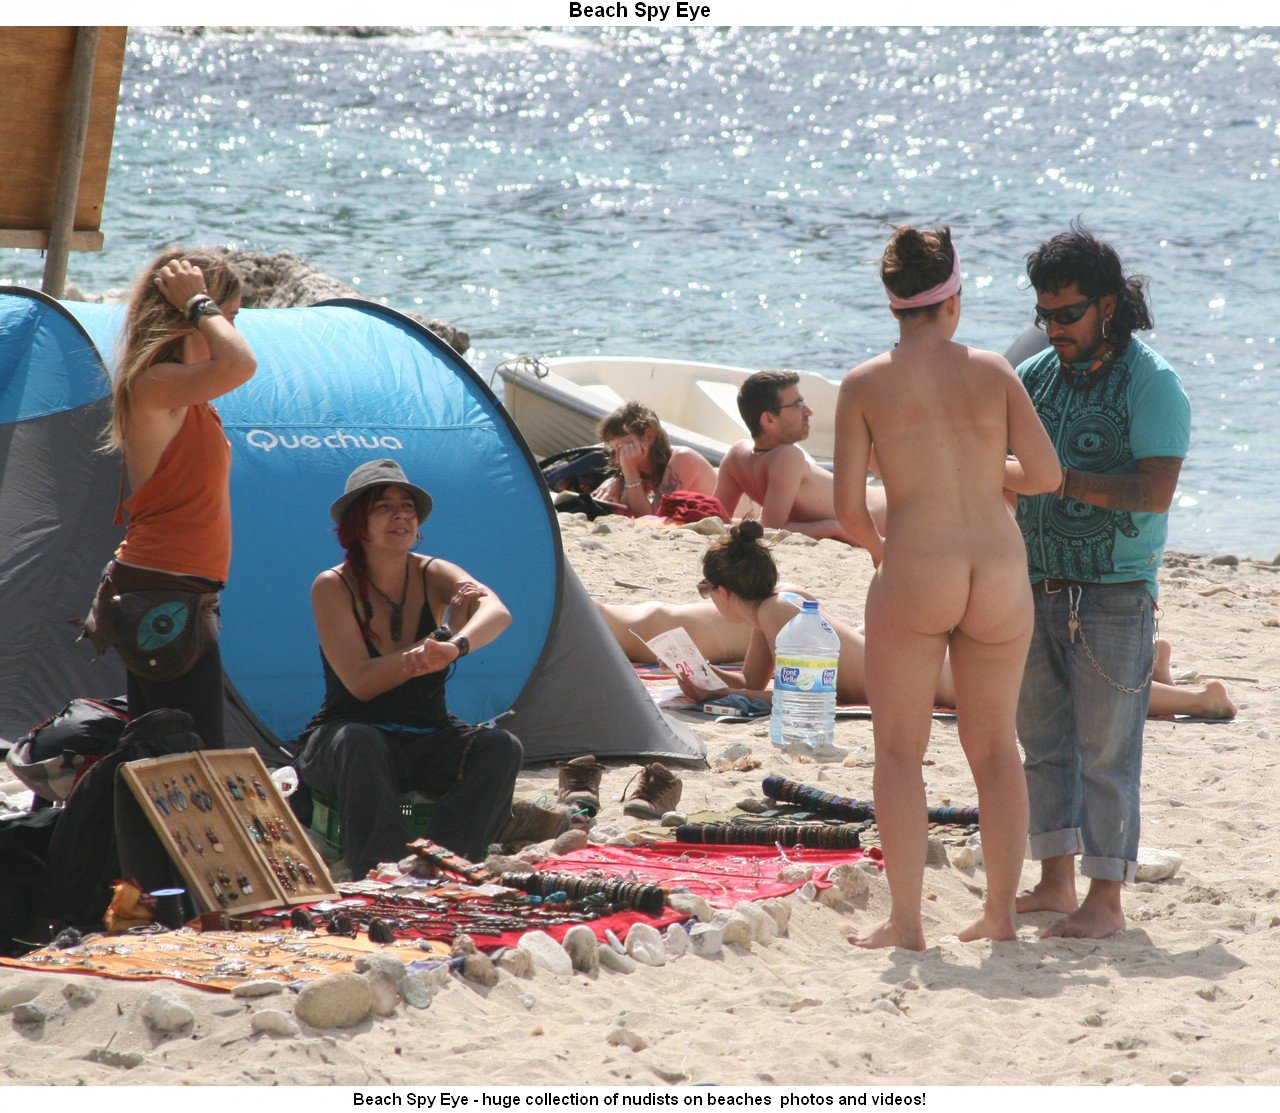 Nude Beaches Pics Nudist beach photos - adorable blonds and brunet.. Scene 4